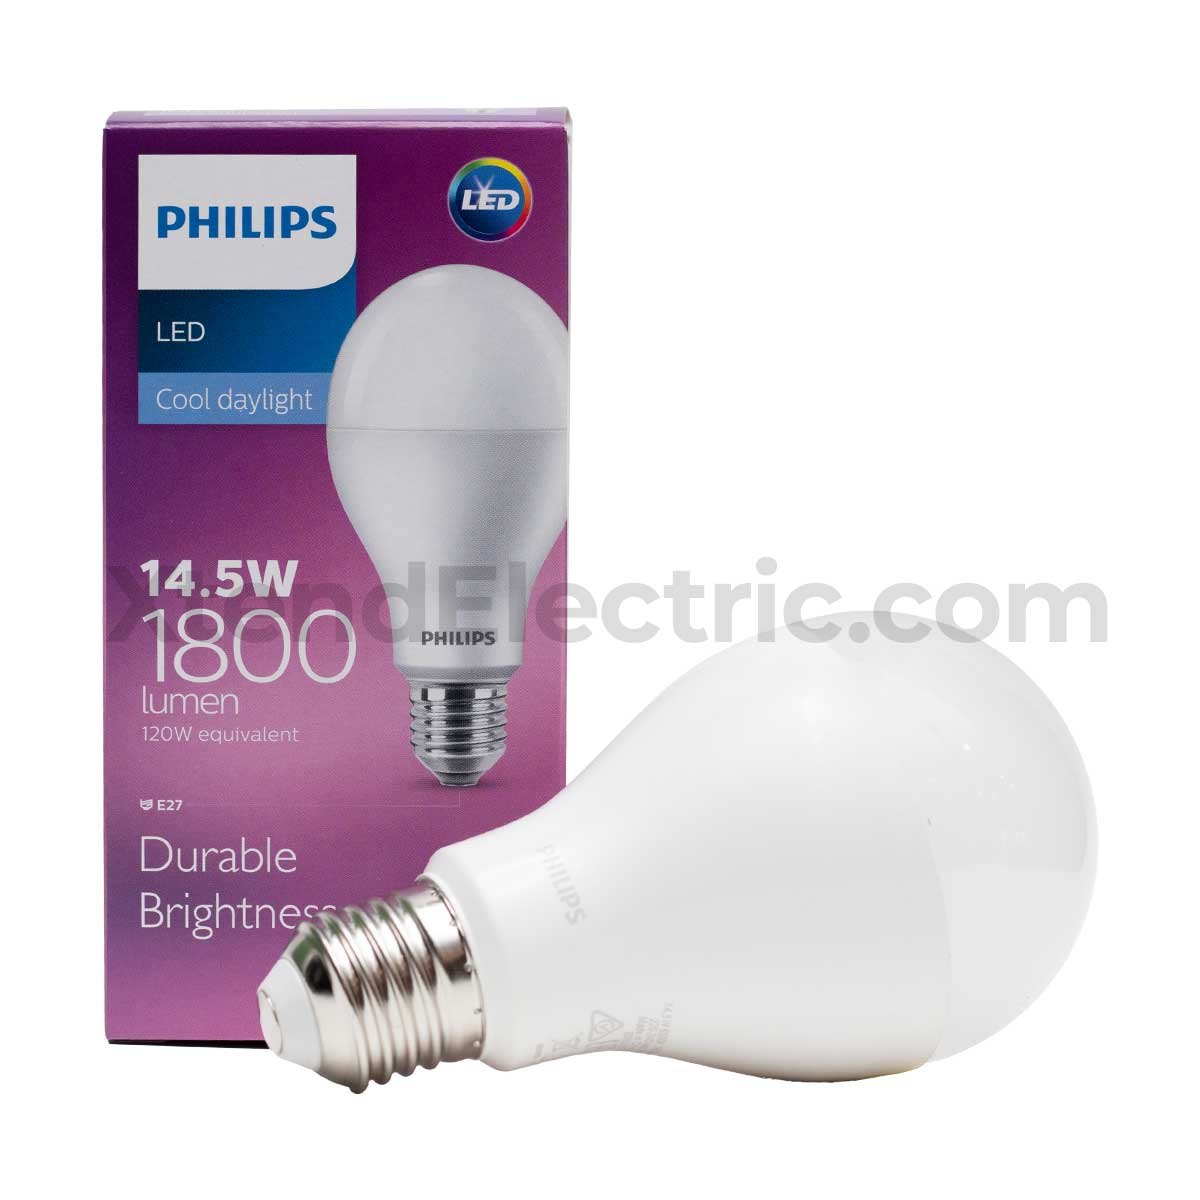 Philips-LED-Bulb-14.5w-DL